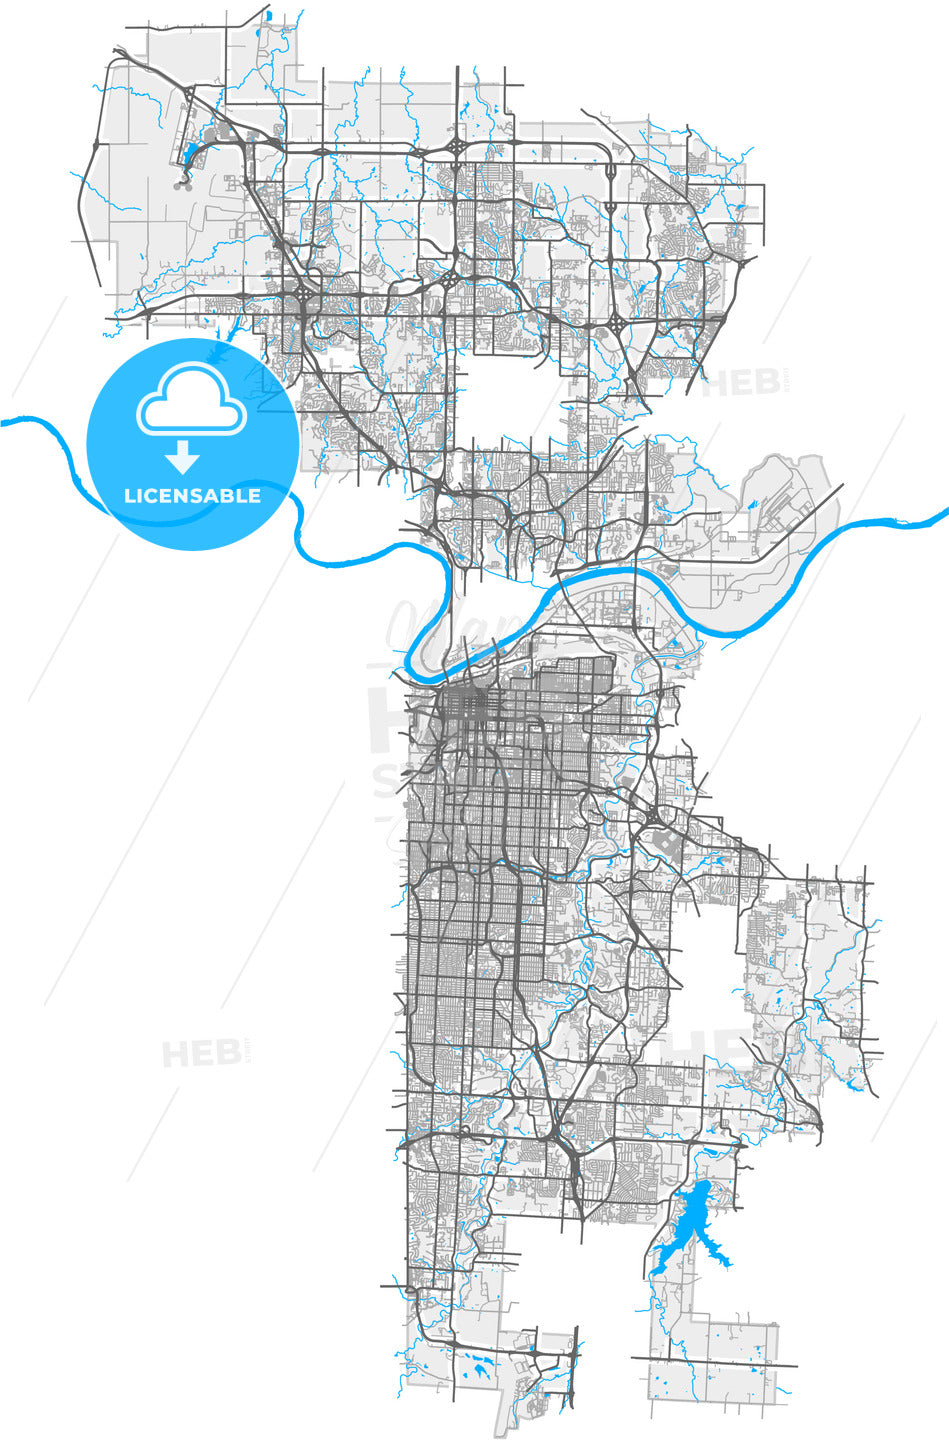 Kansas City, Missouri, United States, high quality vector map